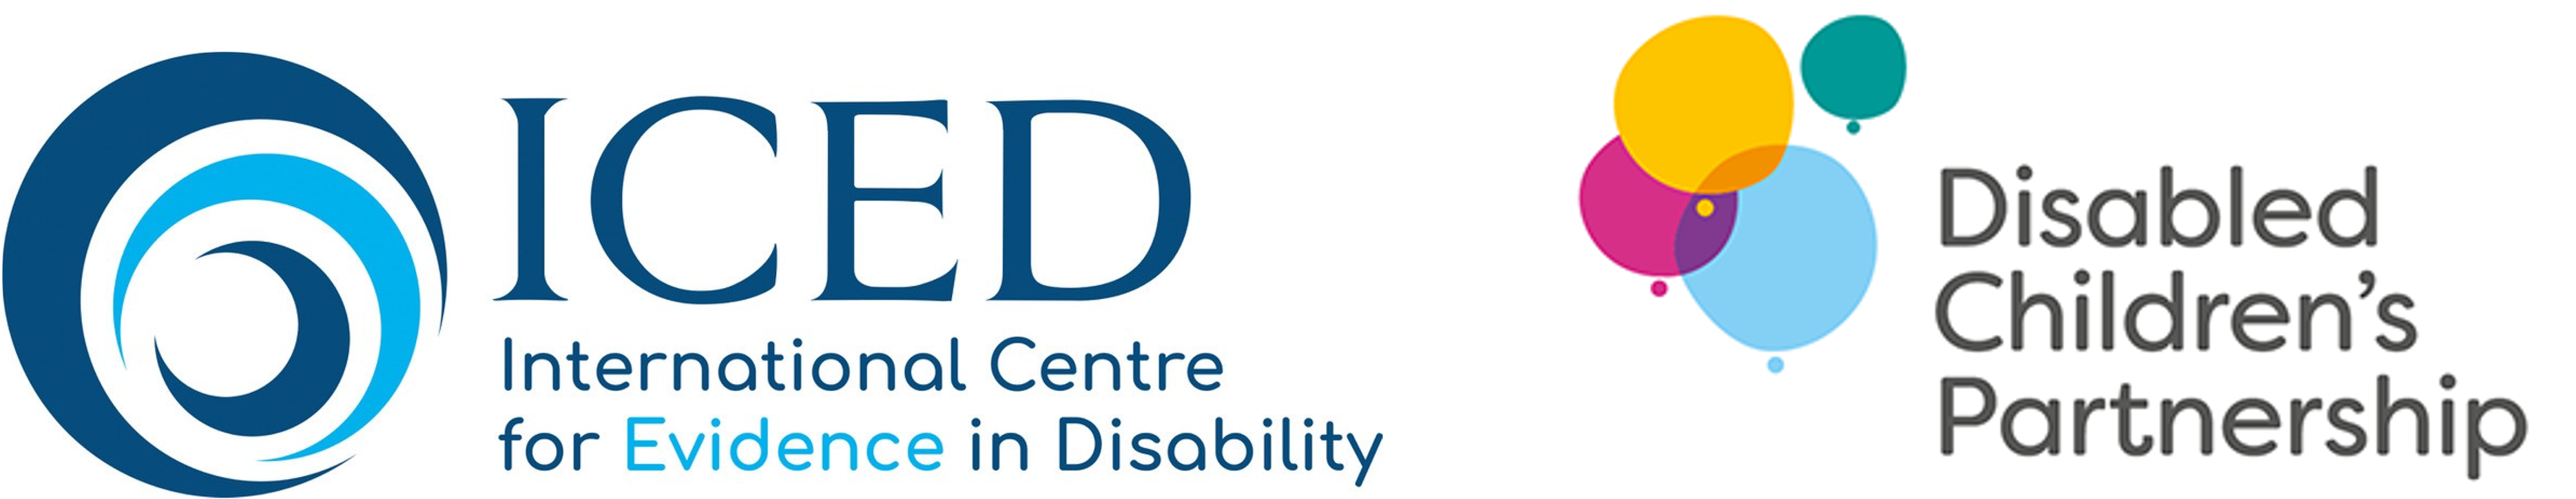 LSHTM International Centre for Evidence in Disability and Disabled Children’s Partnership logos